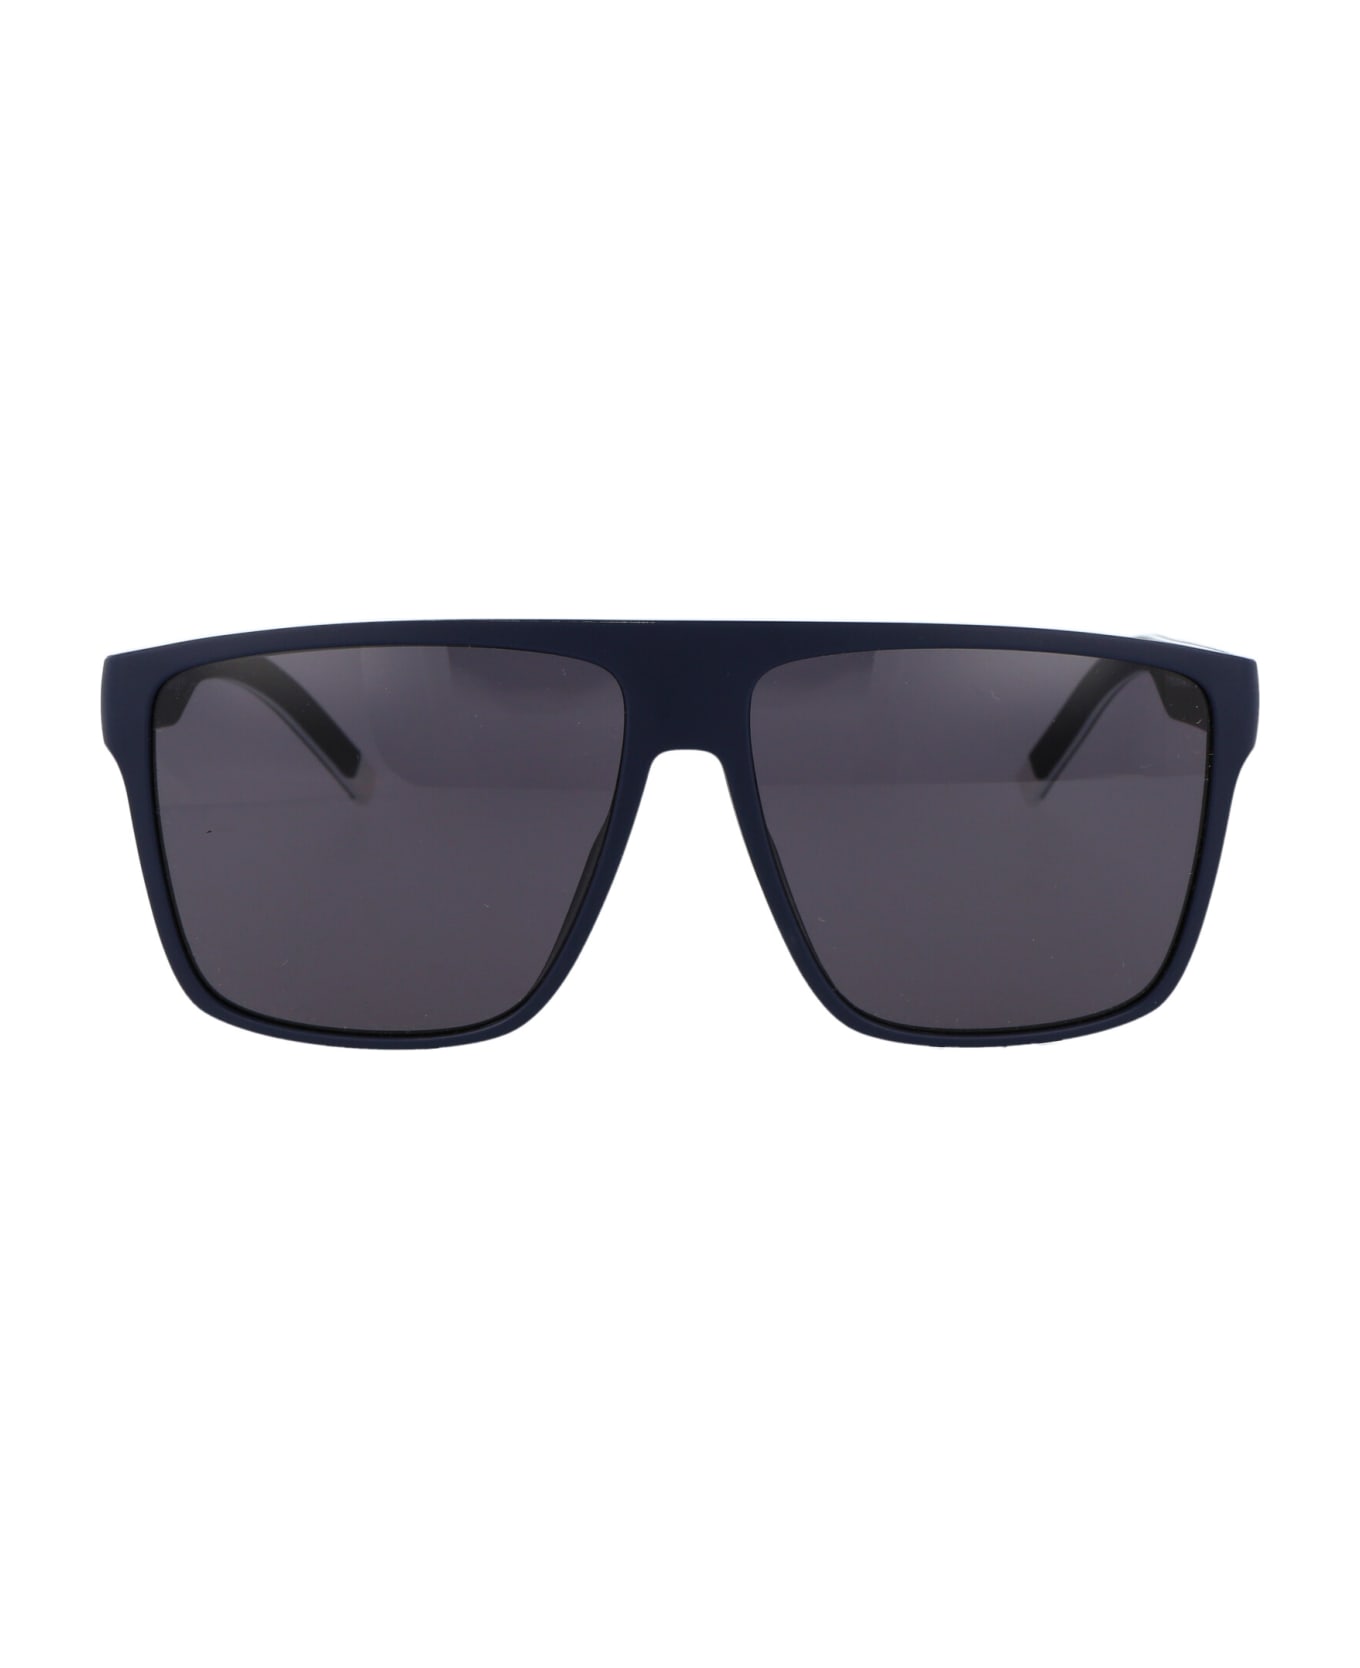 Tommy Hilfiger Th 1717/s Sunglasses - 0JUIR BLUE